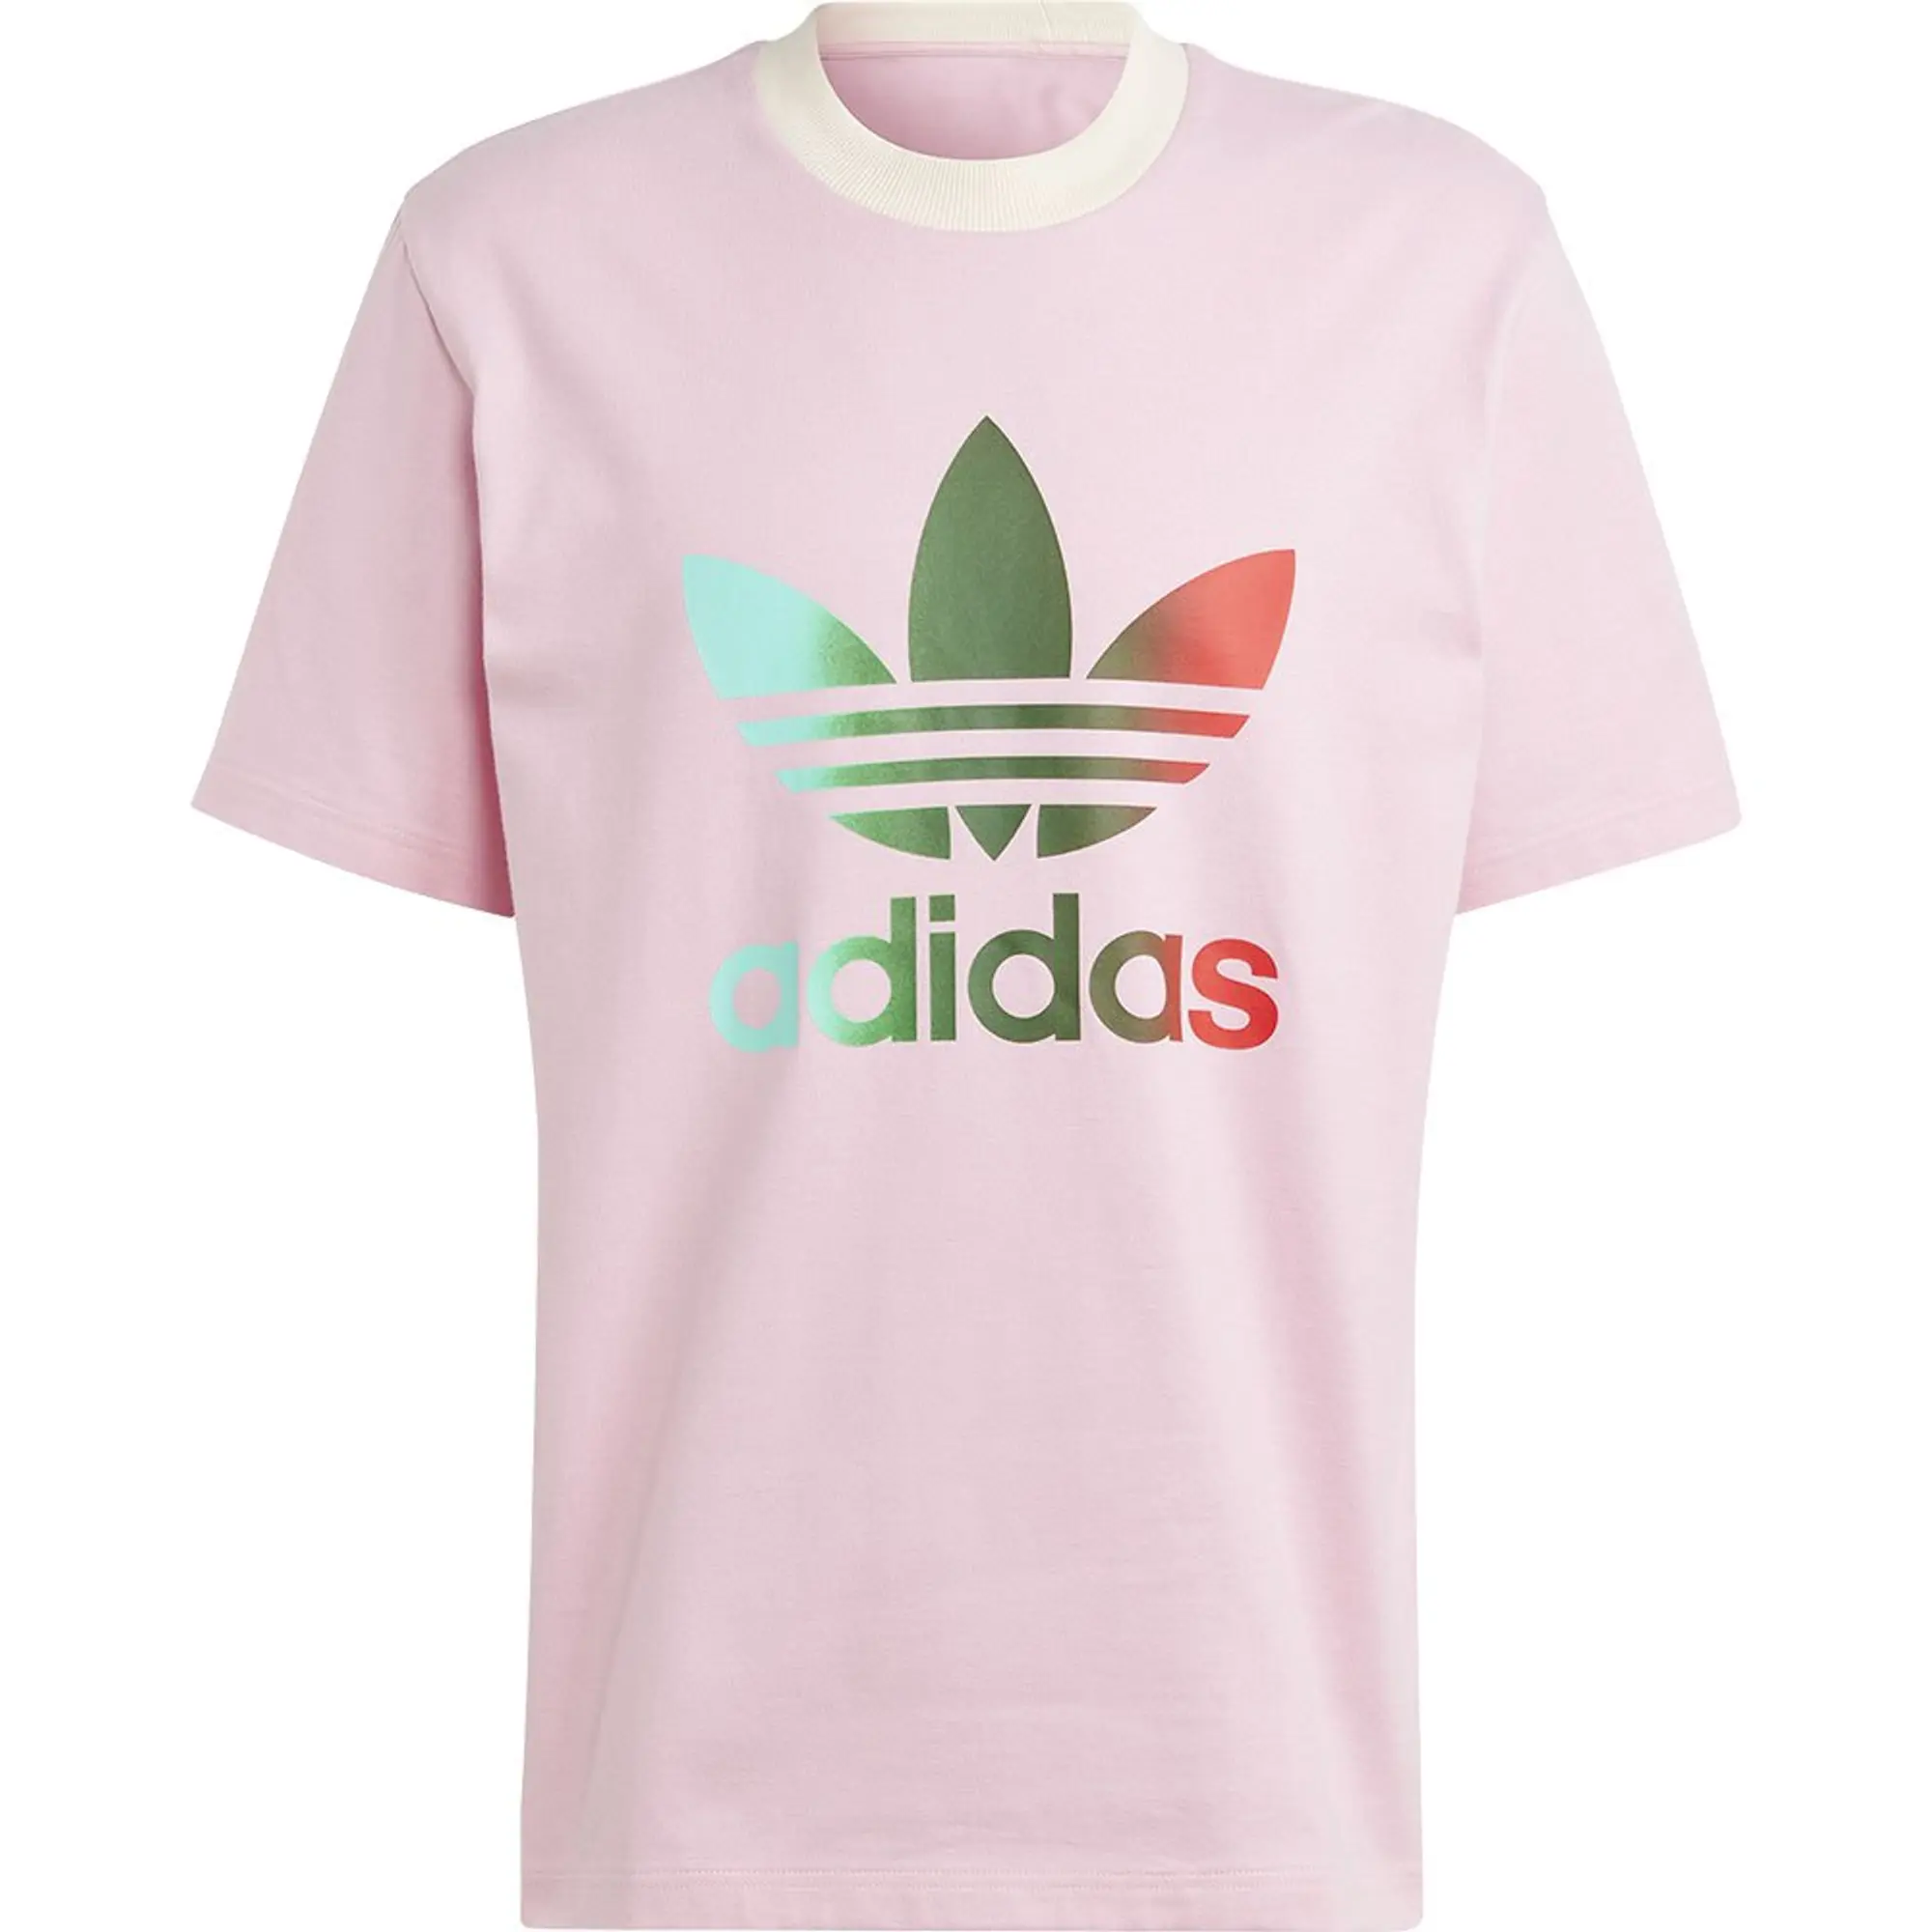 adidas Originals Adidas Trefoil Tee True Pink